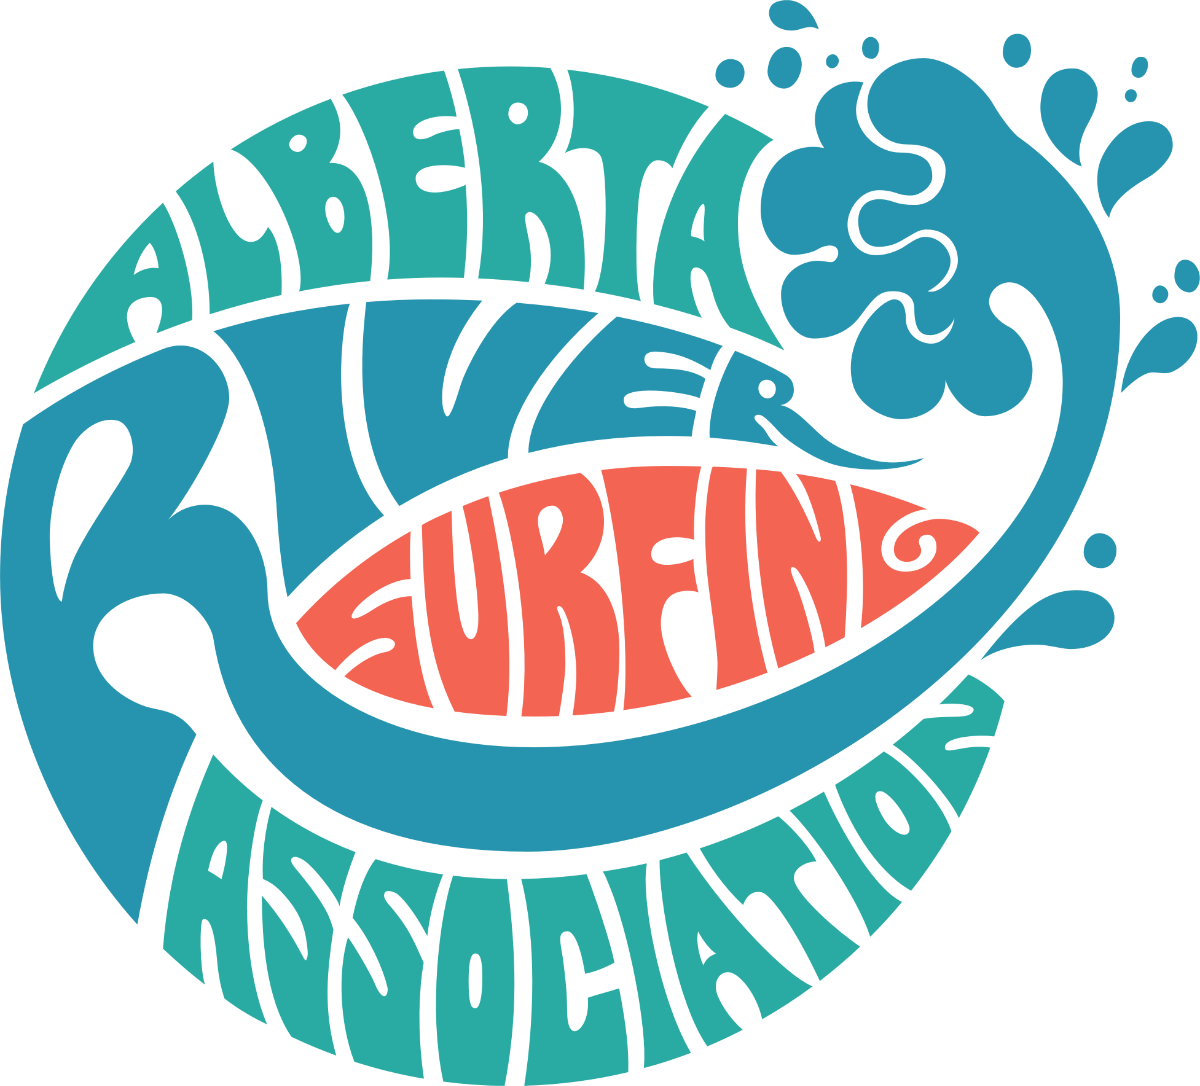 Alberta River Surfing retro design